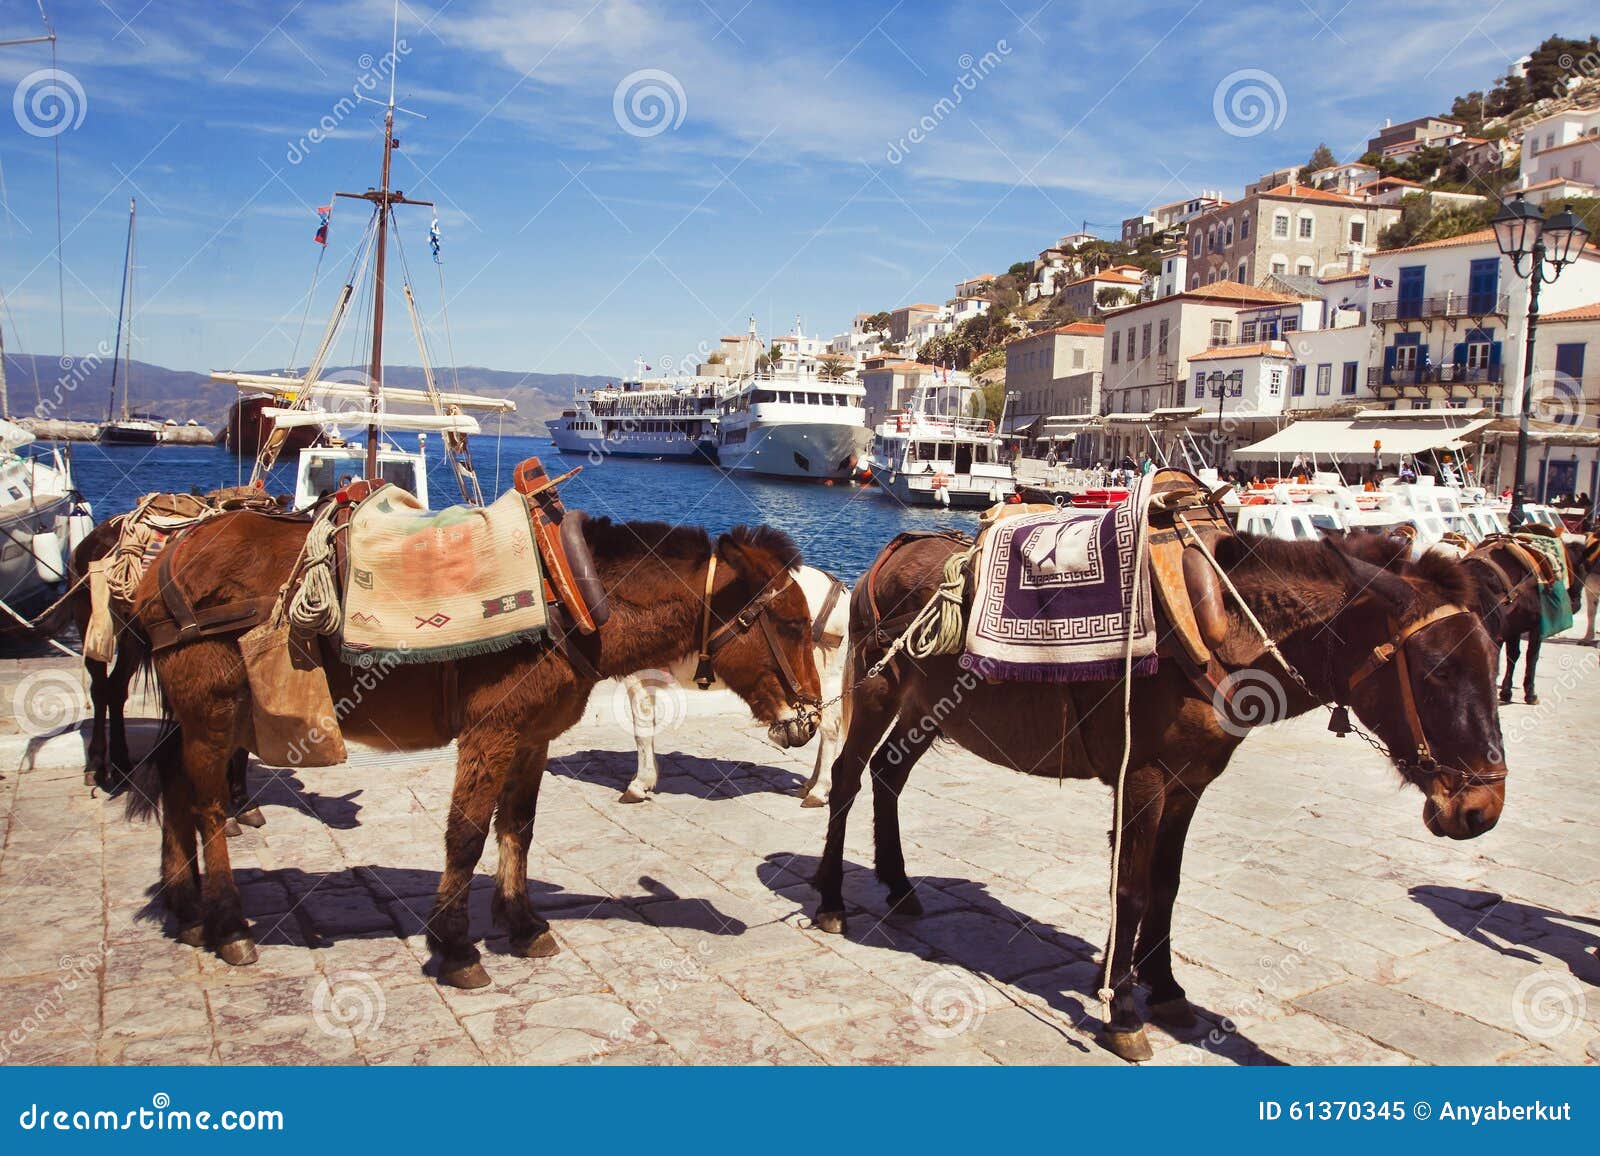 port of hydra, greece